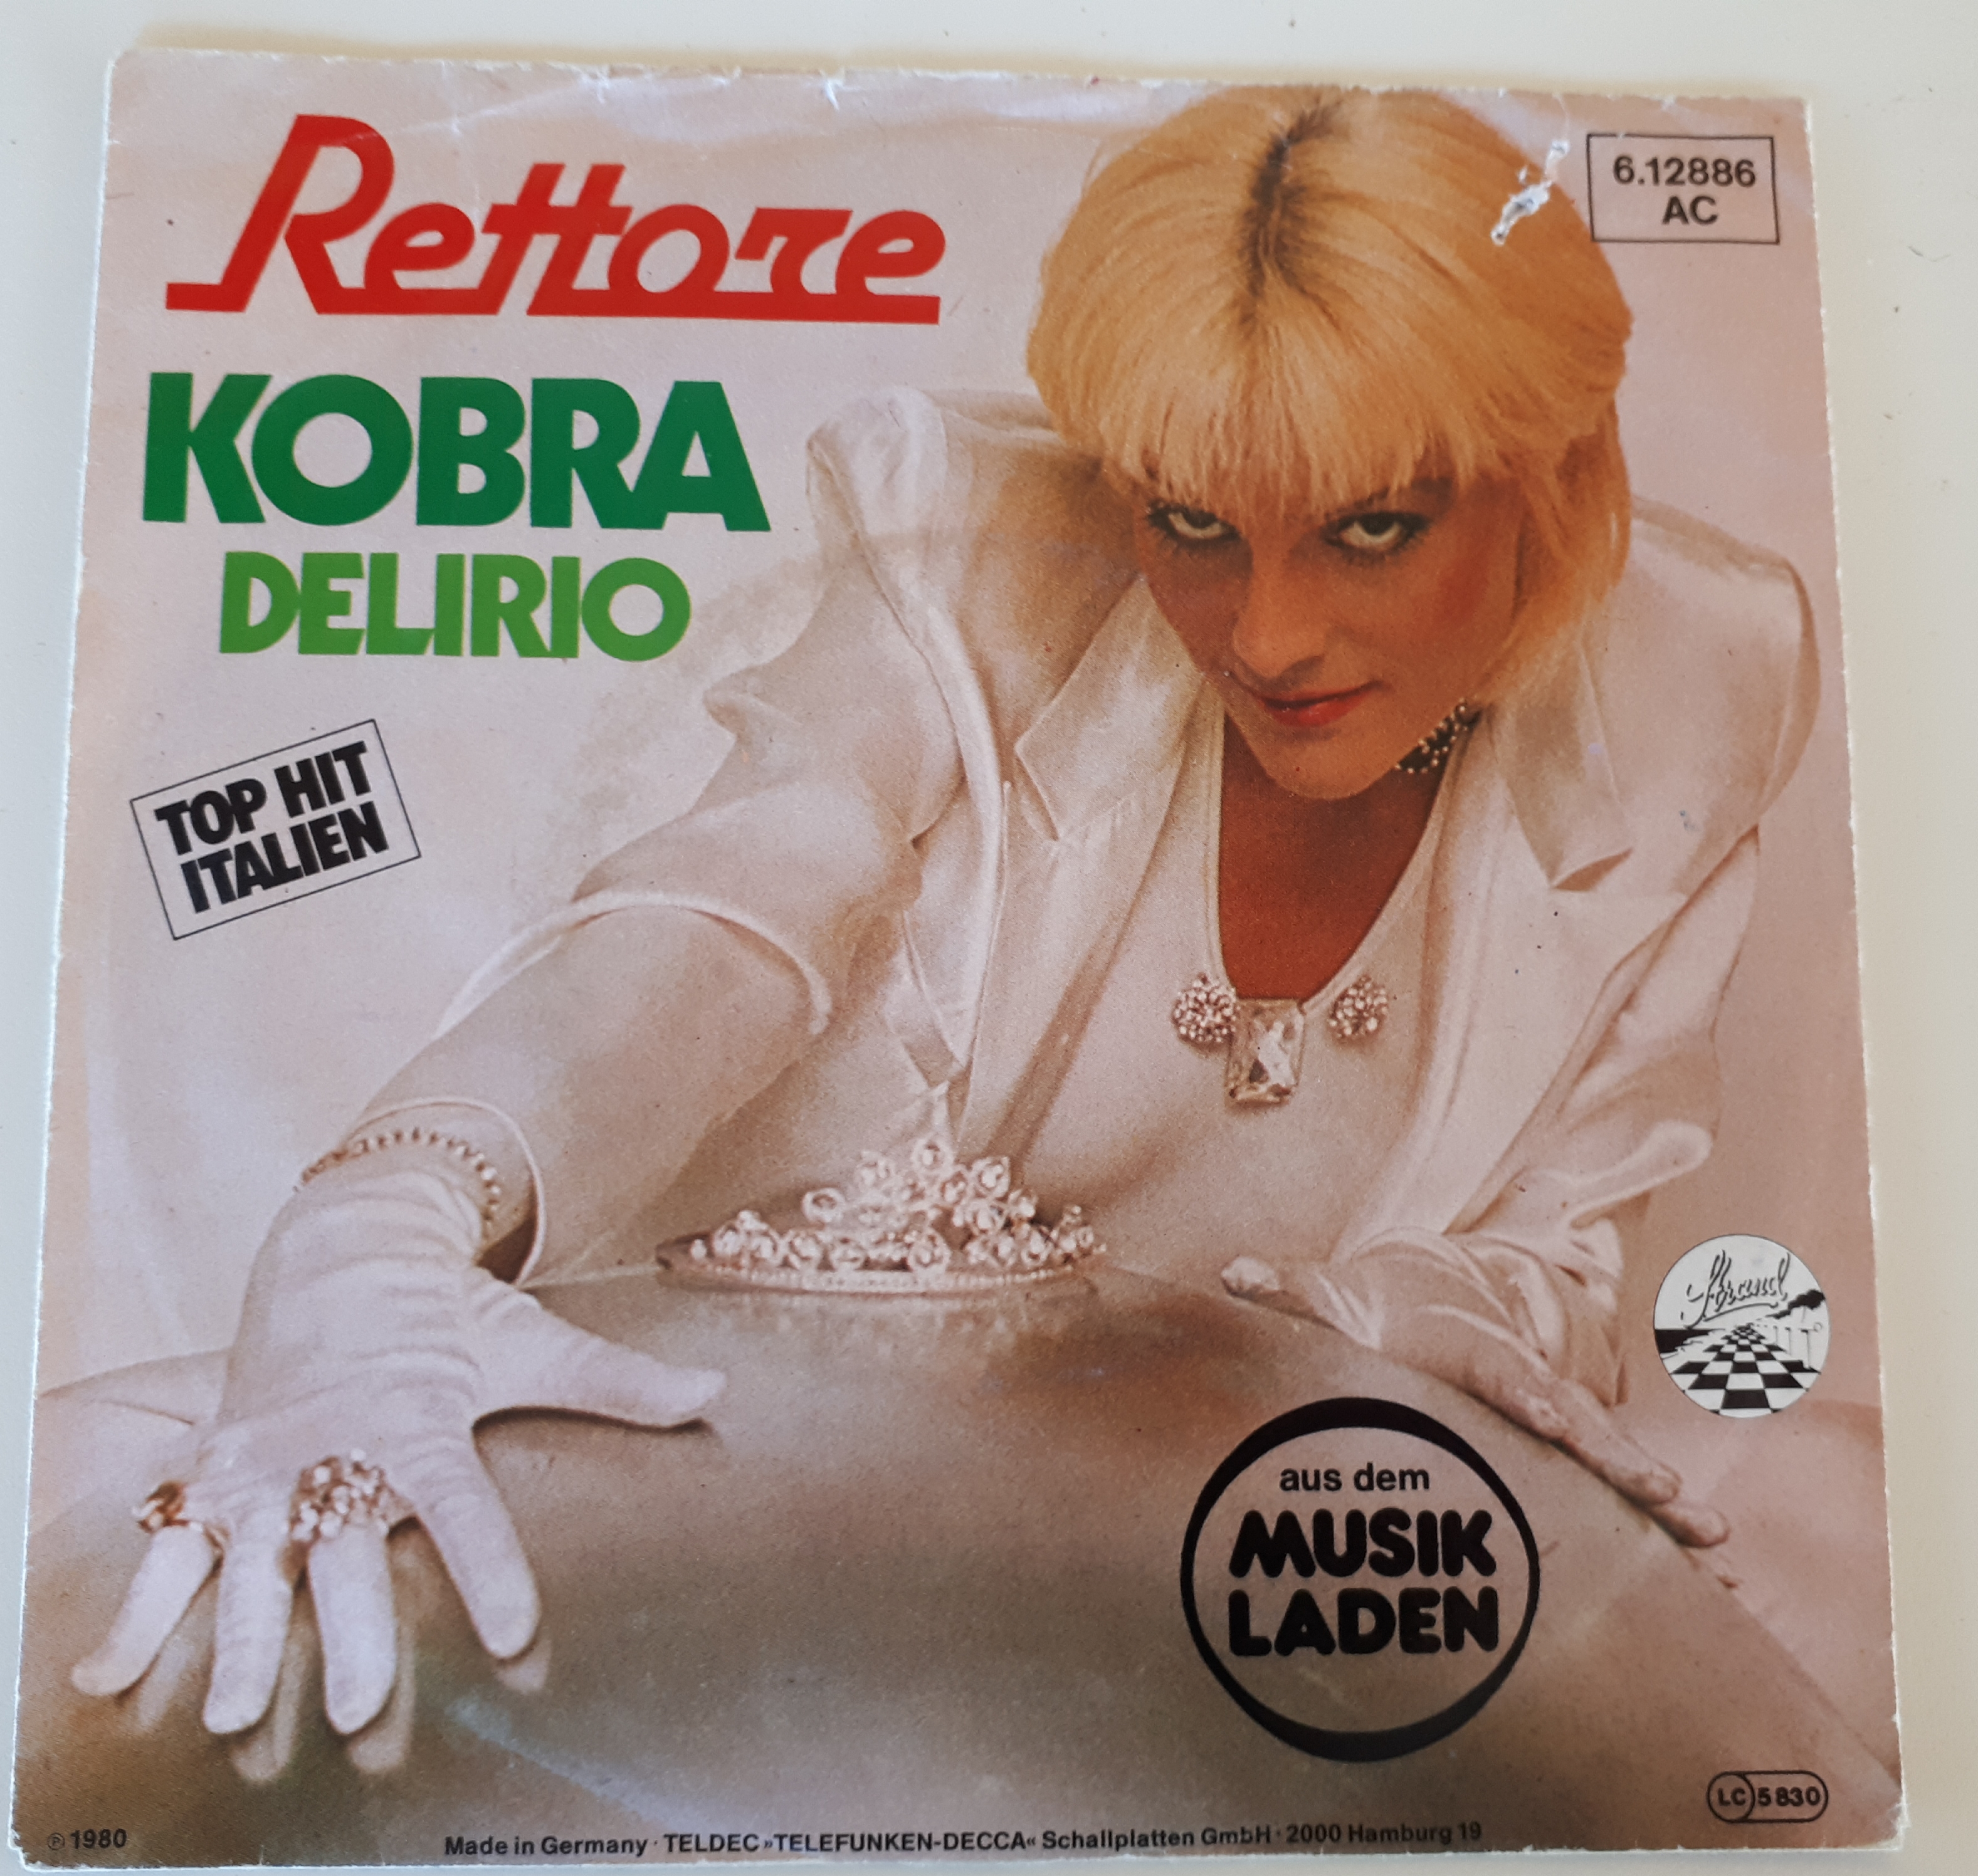 Rettore - Kobra (German Press)